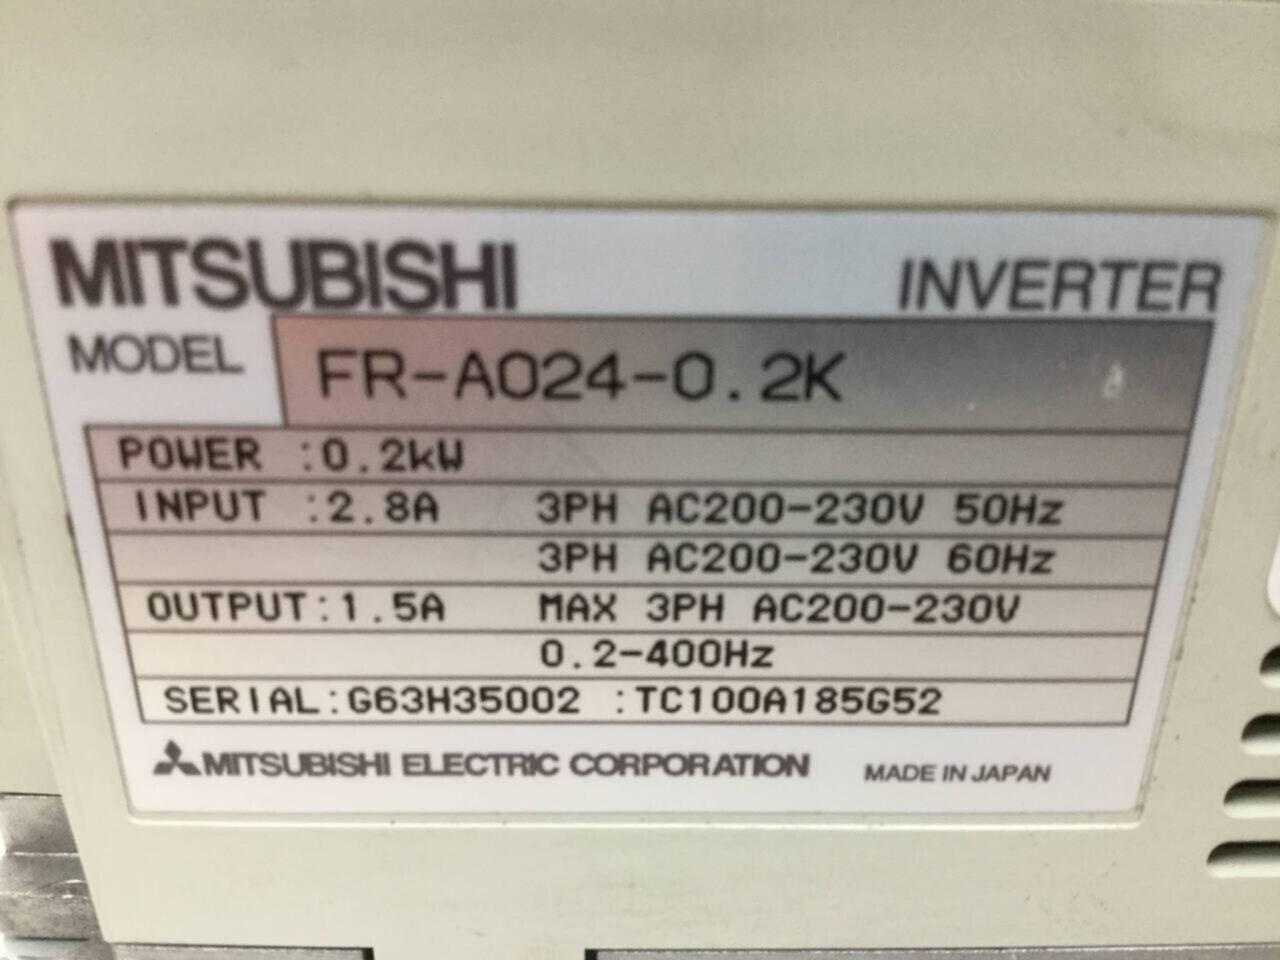 W/ FR-PU03 UNIT 0.2KW MITSUBISHI FR-A024-0.2KP INVERTER AC200-230V 50/60HZ 